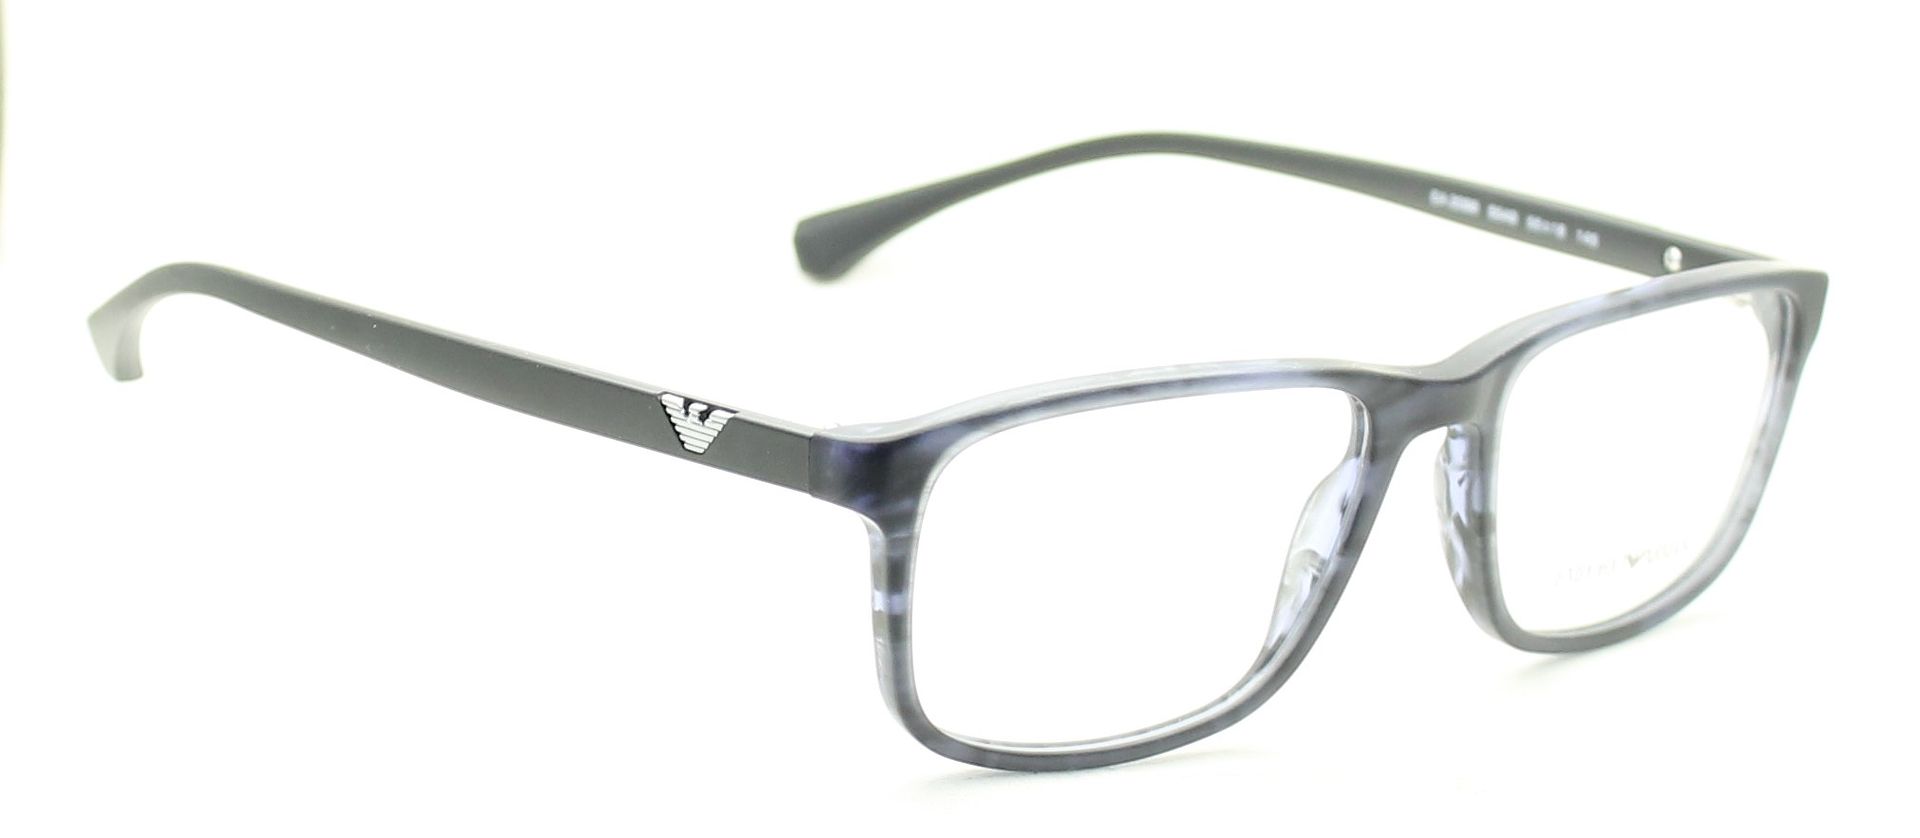 EMPORIO ARMANI EA3098 5549 55mm Eyewear FRAMES RX Optical Glasses